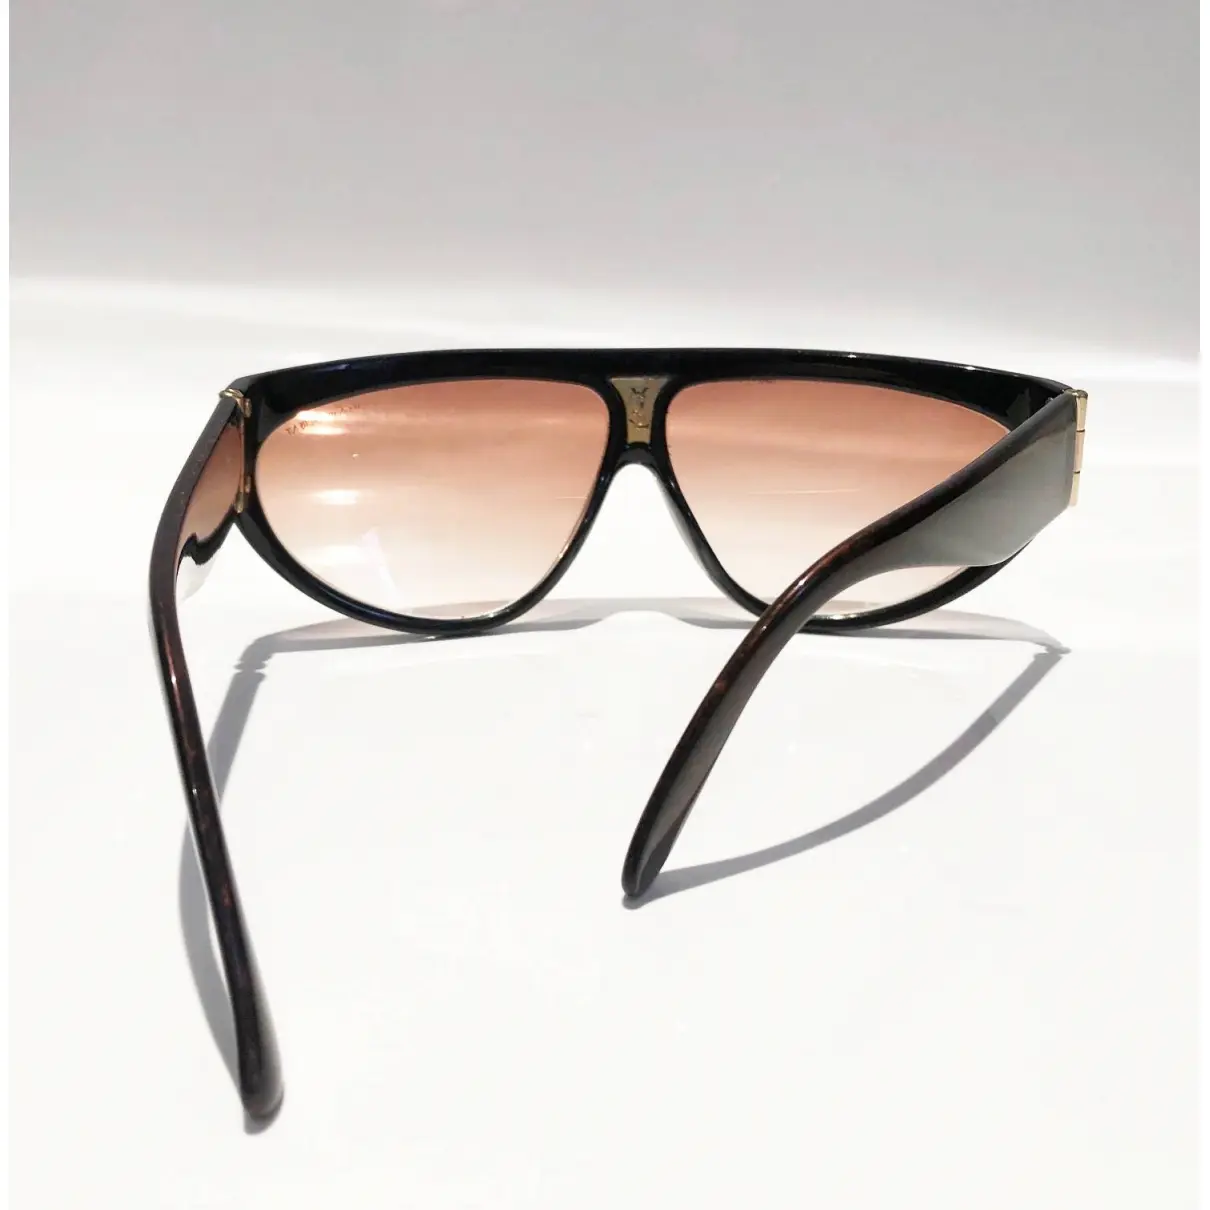 Luxury Yves Saint Laurent Sunglasses Women - Vintage